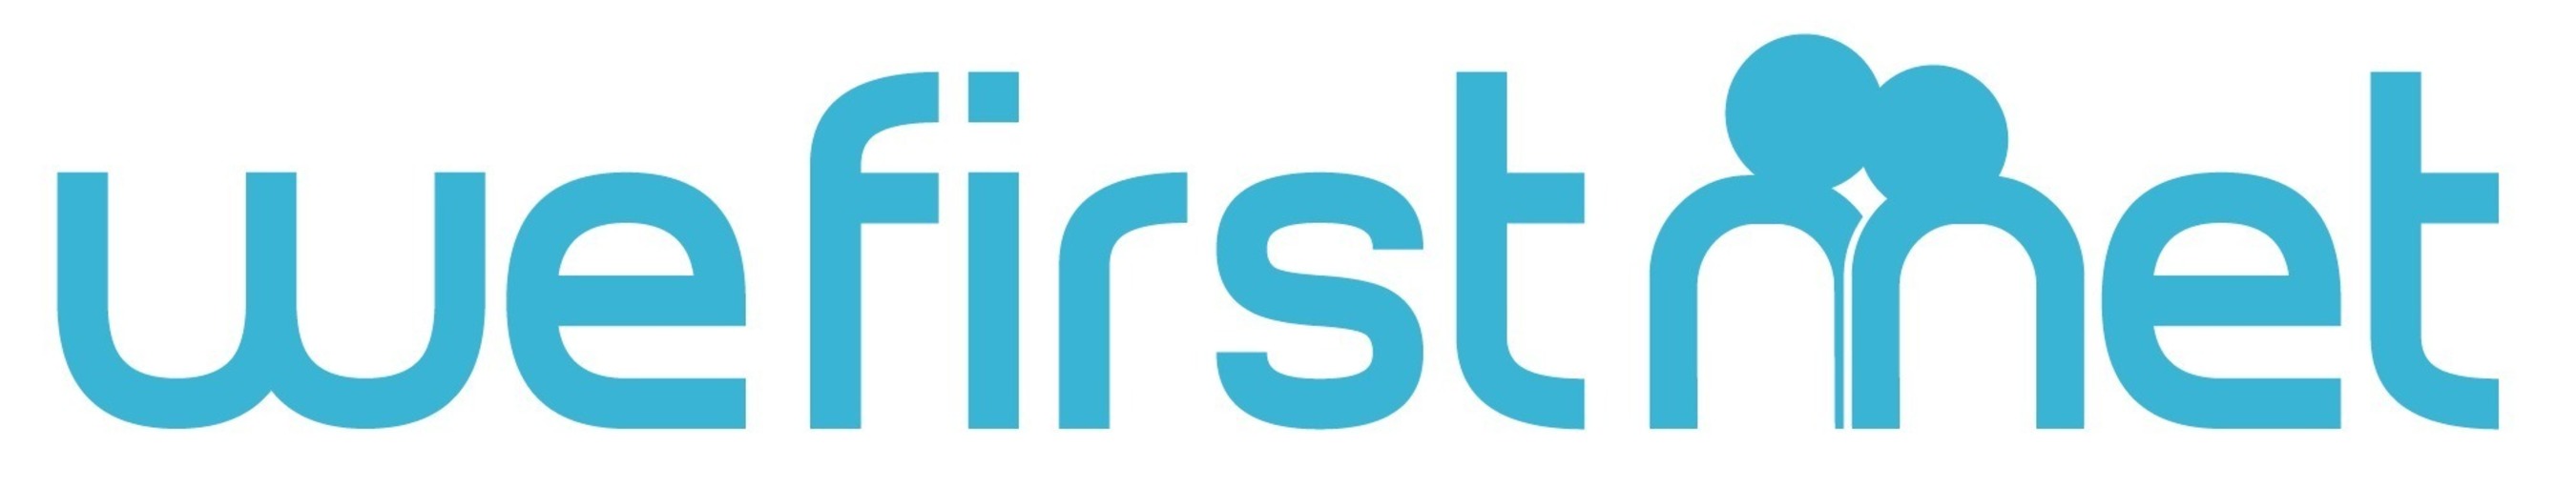 We First Met Logo (PRNewsFoto/We First Met)